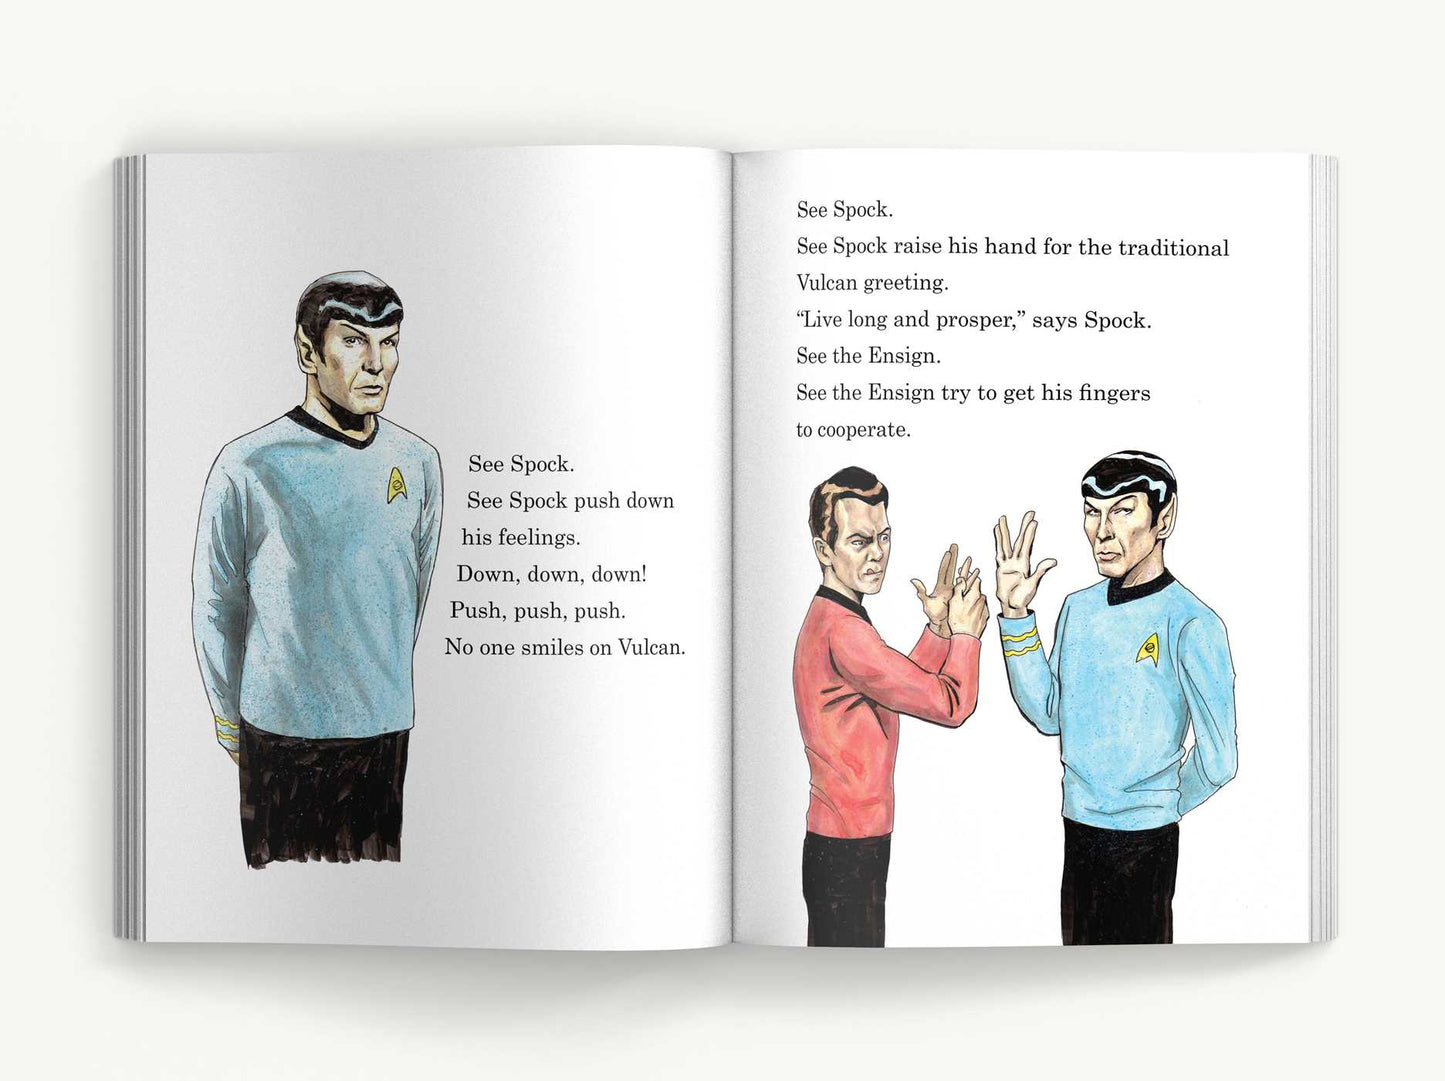 Fun With Kirk and Spock: A Star-Trek Parody